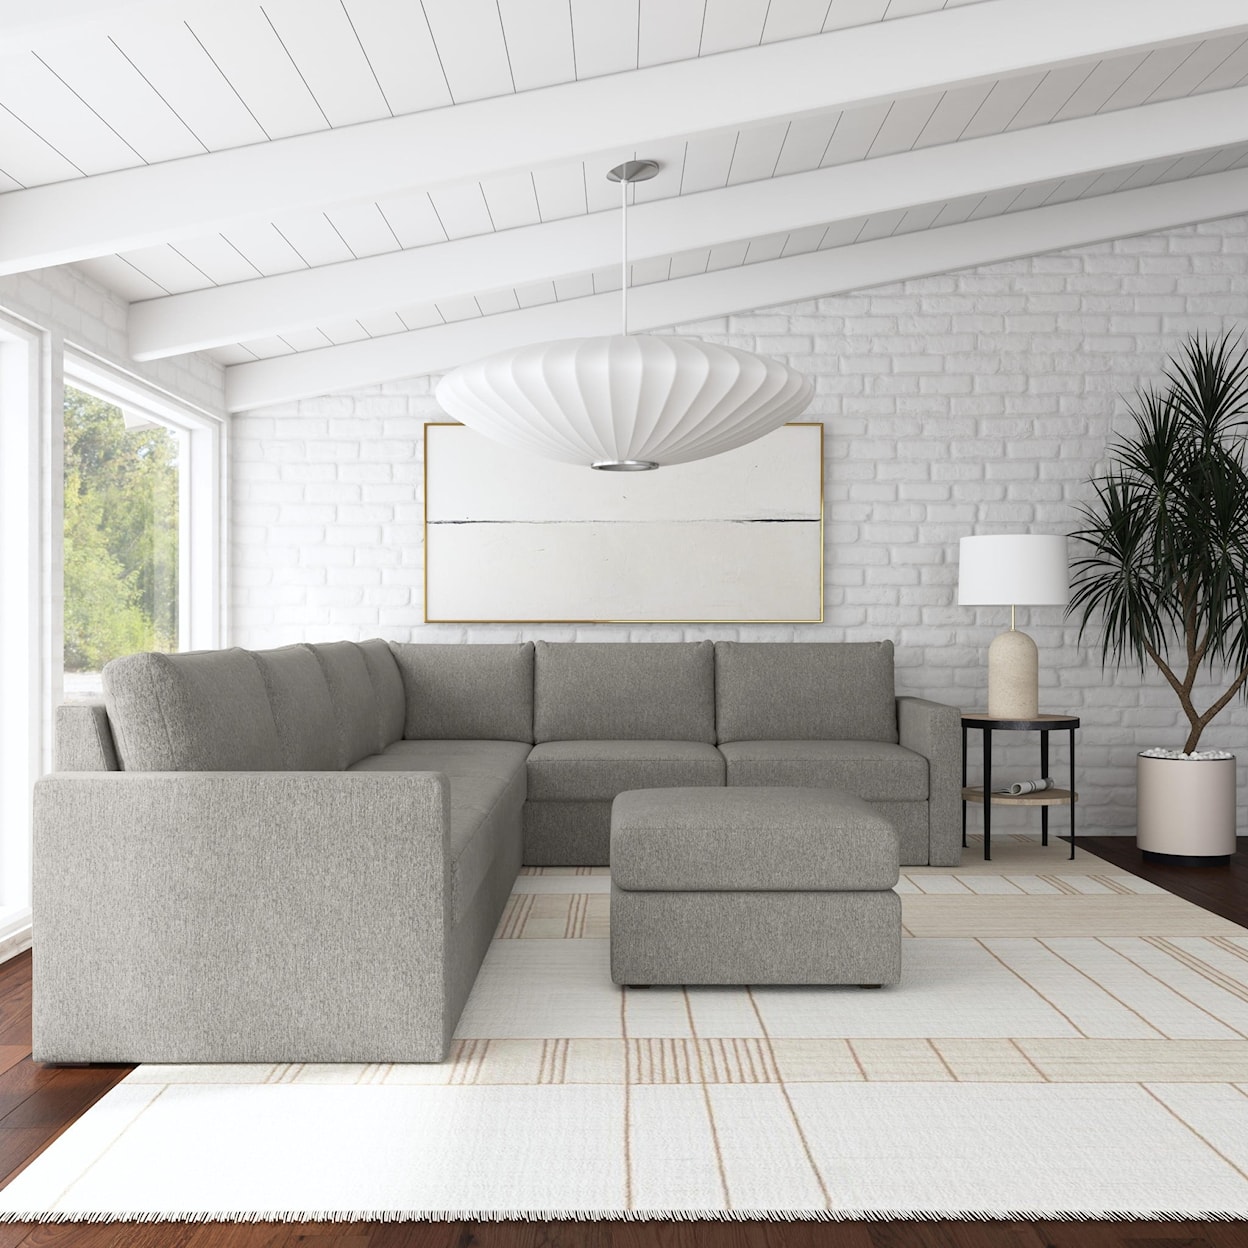 Flexsteel Flex Sectional Sofa with Ottoman